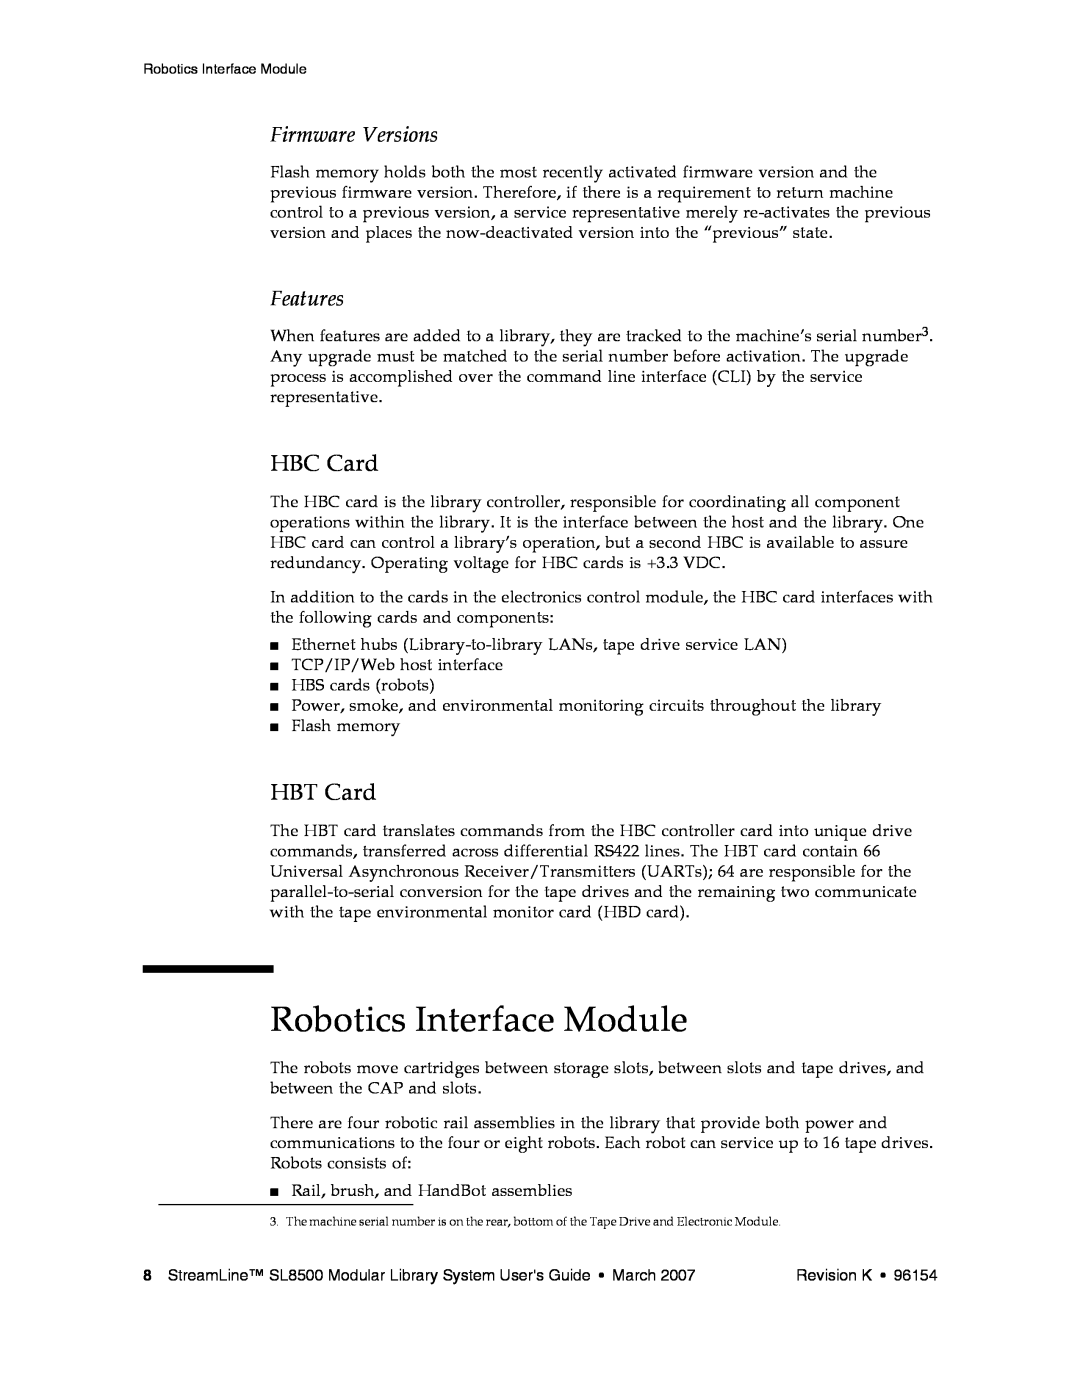 Sun Microsystems SL8500 manual Robotics Interface Module, HBC Card, HBT Card, Firmware Versions, Features 